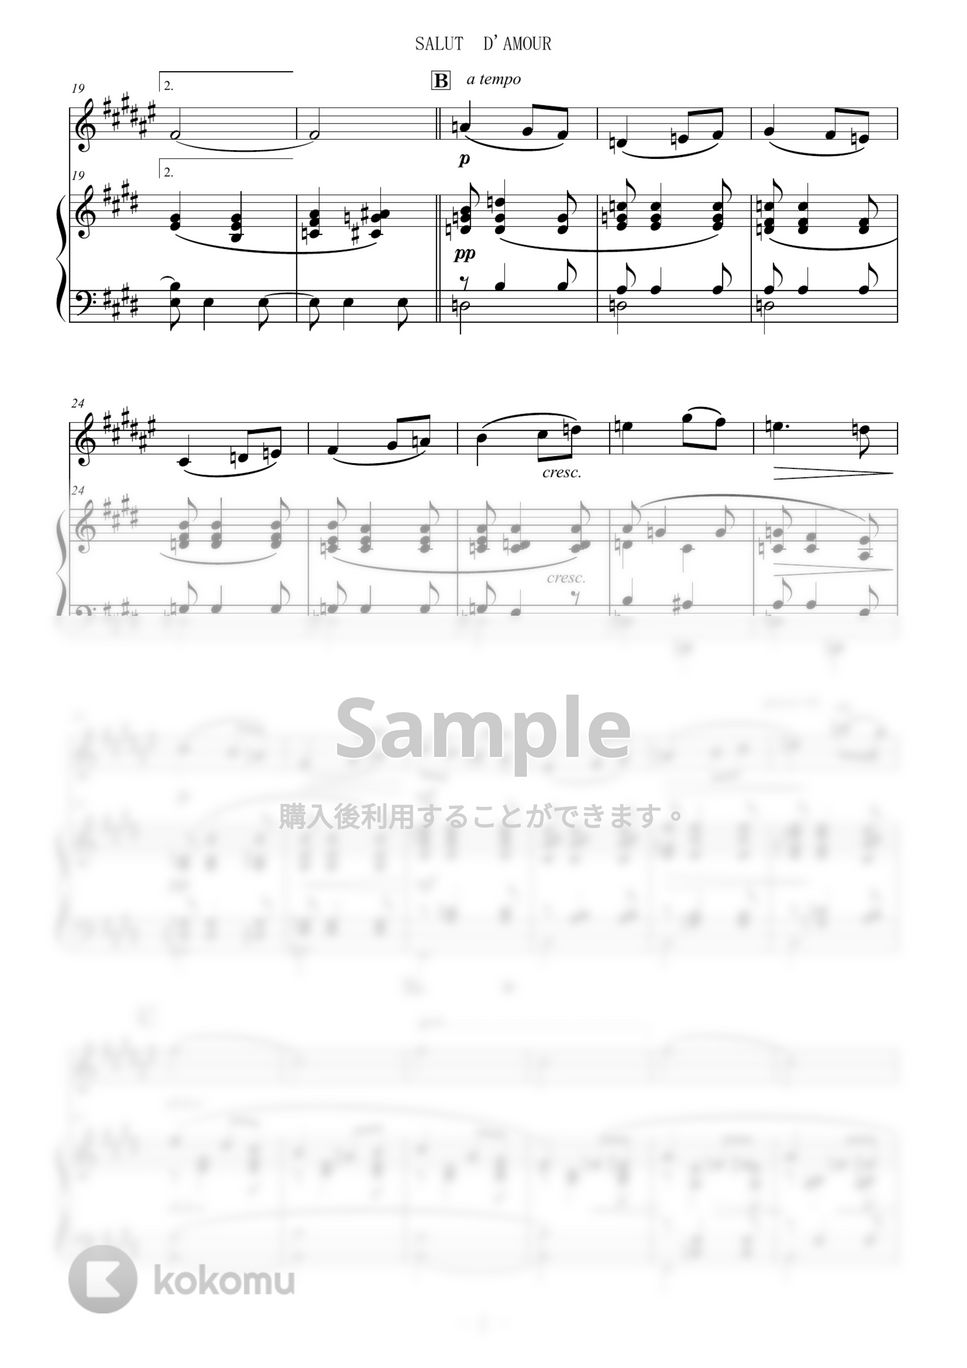 EDWARD ELGAR - 愛の挨拶 / SALUT D'AMOUR for Bass Clarinet and Piano (原調版) (バスクラ/バスクラリネット/エルガー/ピアノ) by Zoe